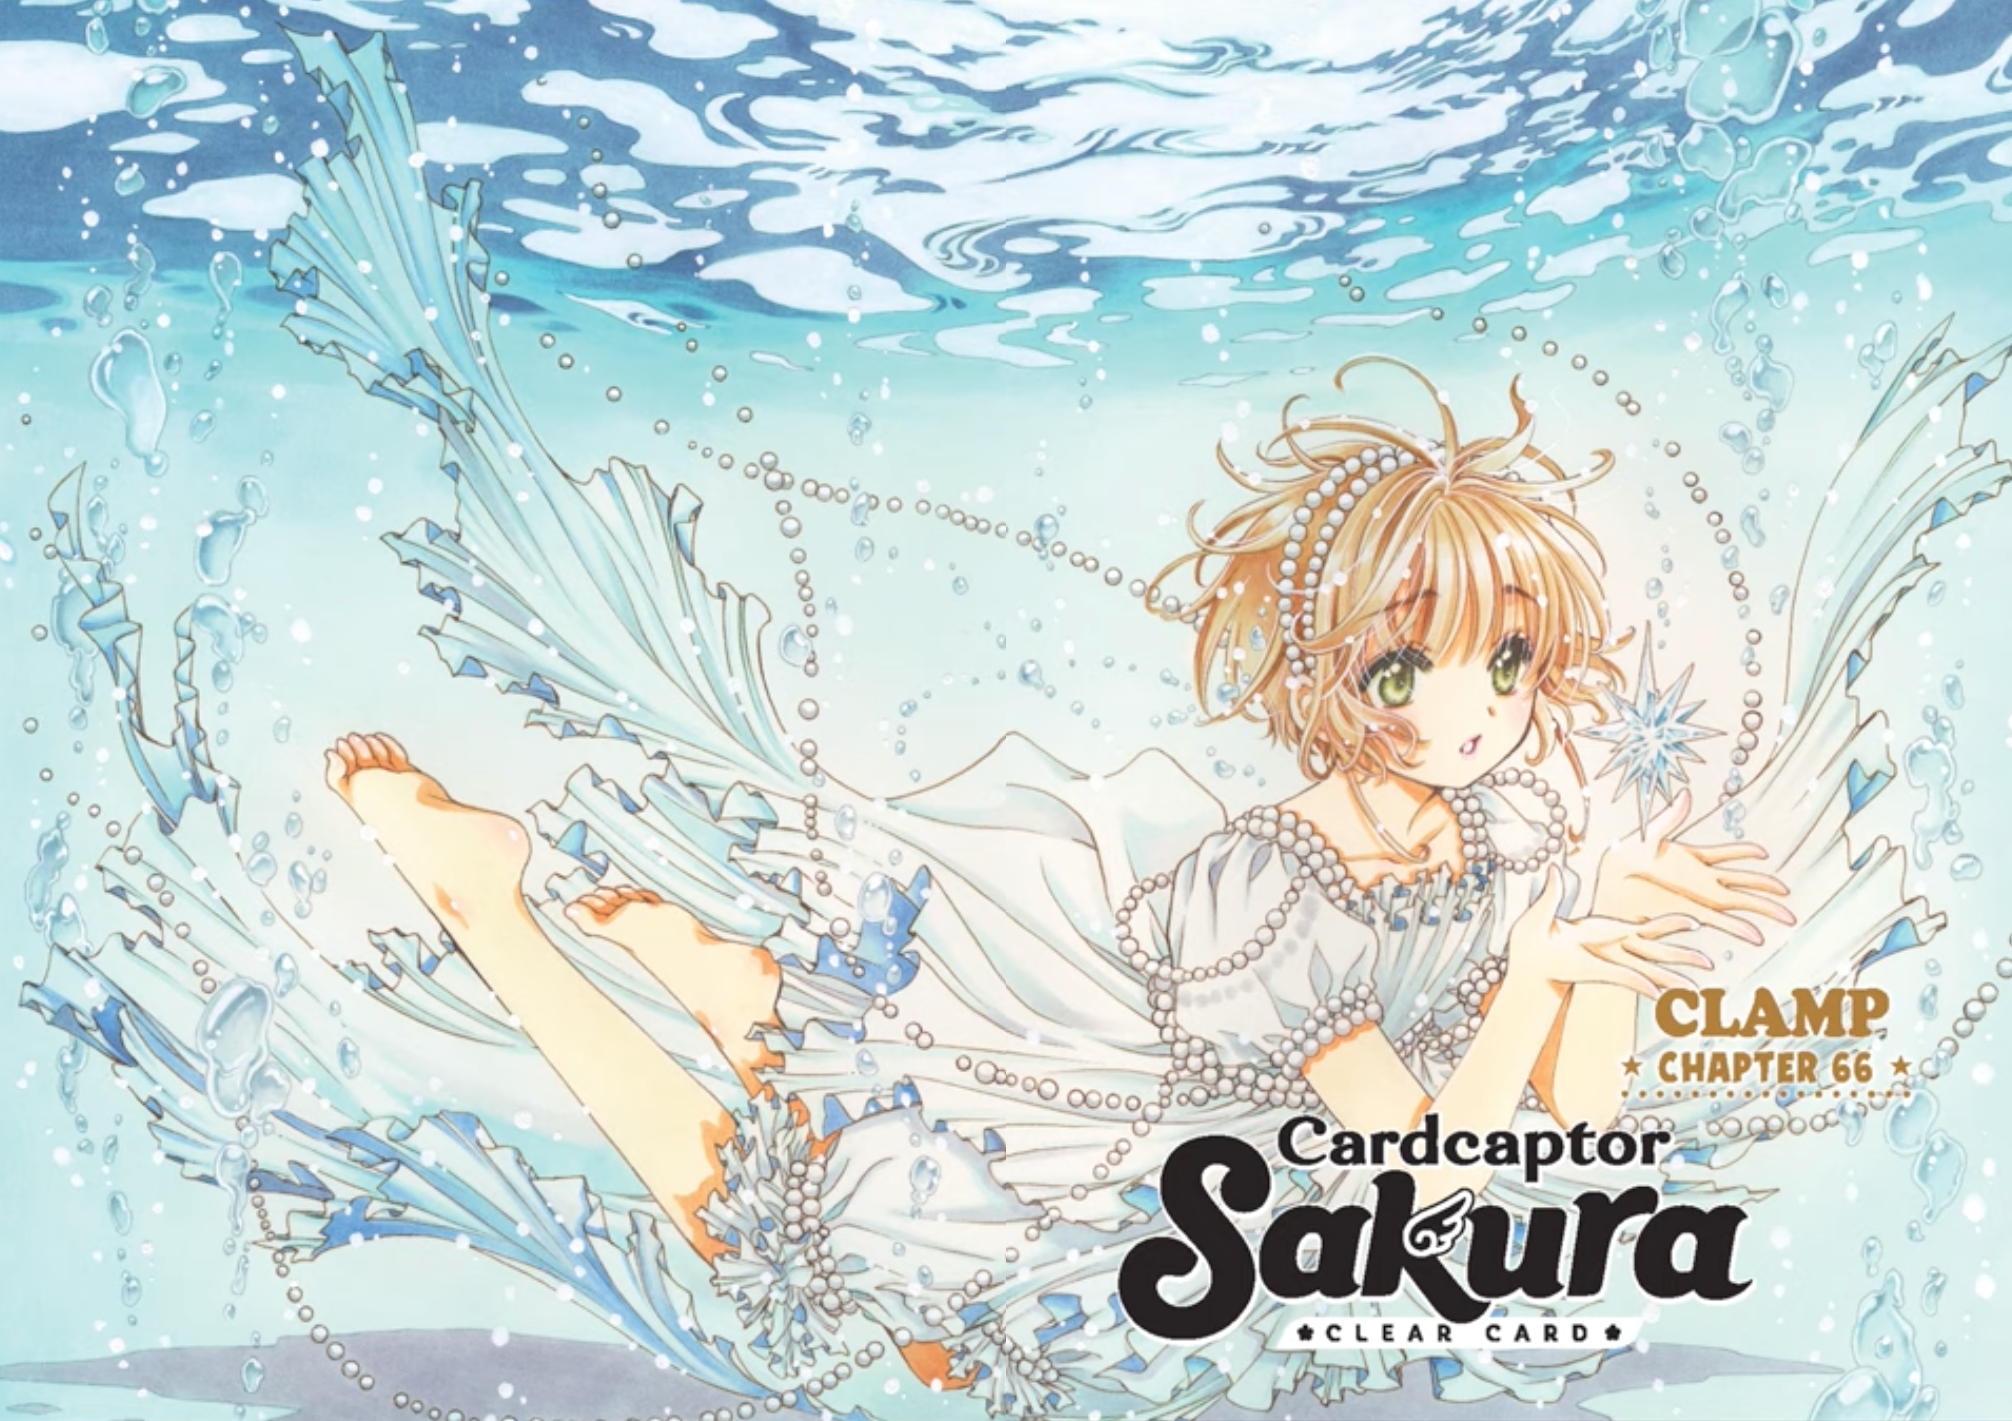 Card Captor Sakura – Clear Card arc – Chapter 74